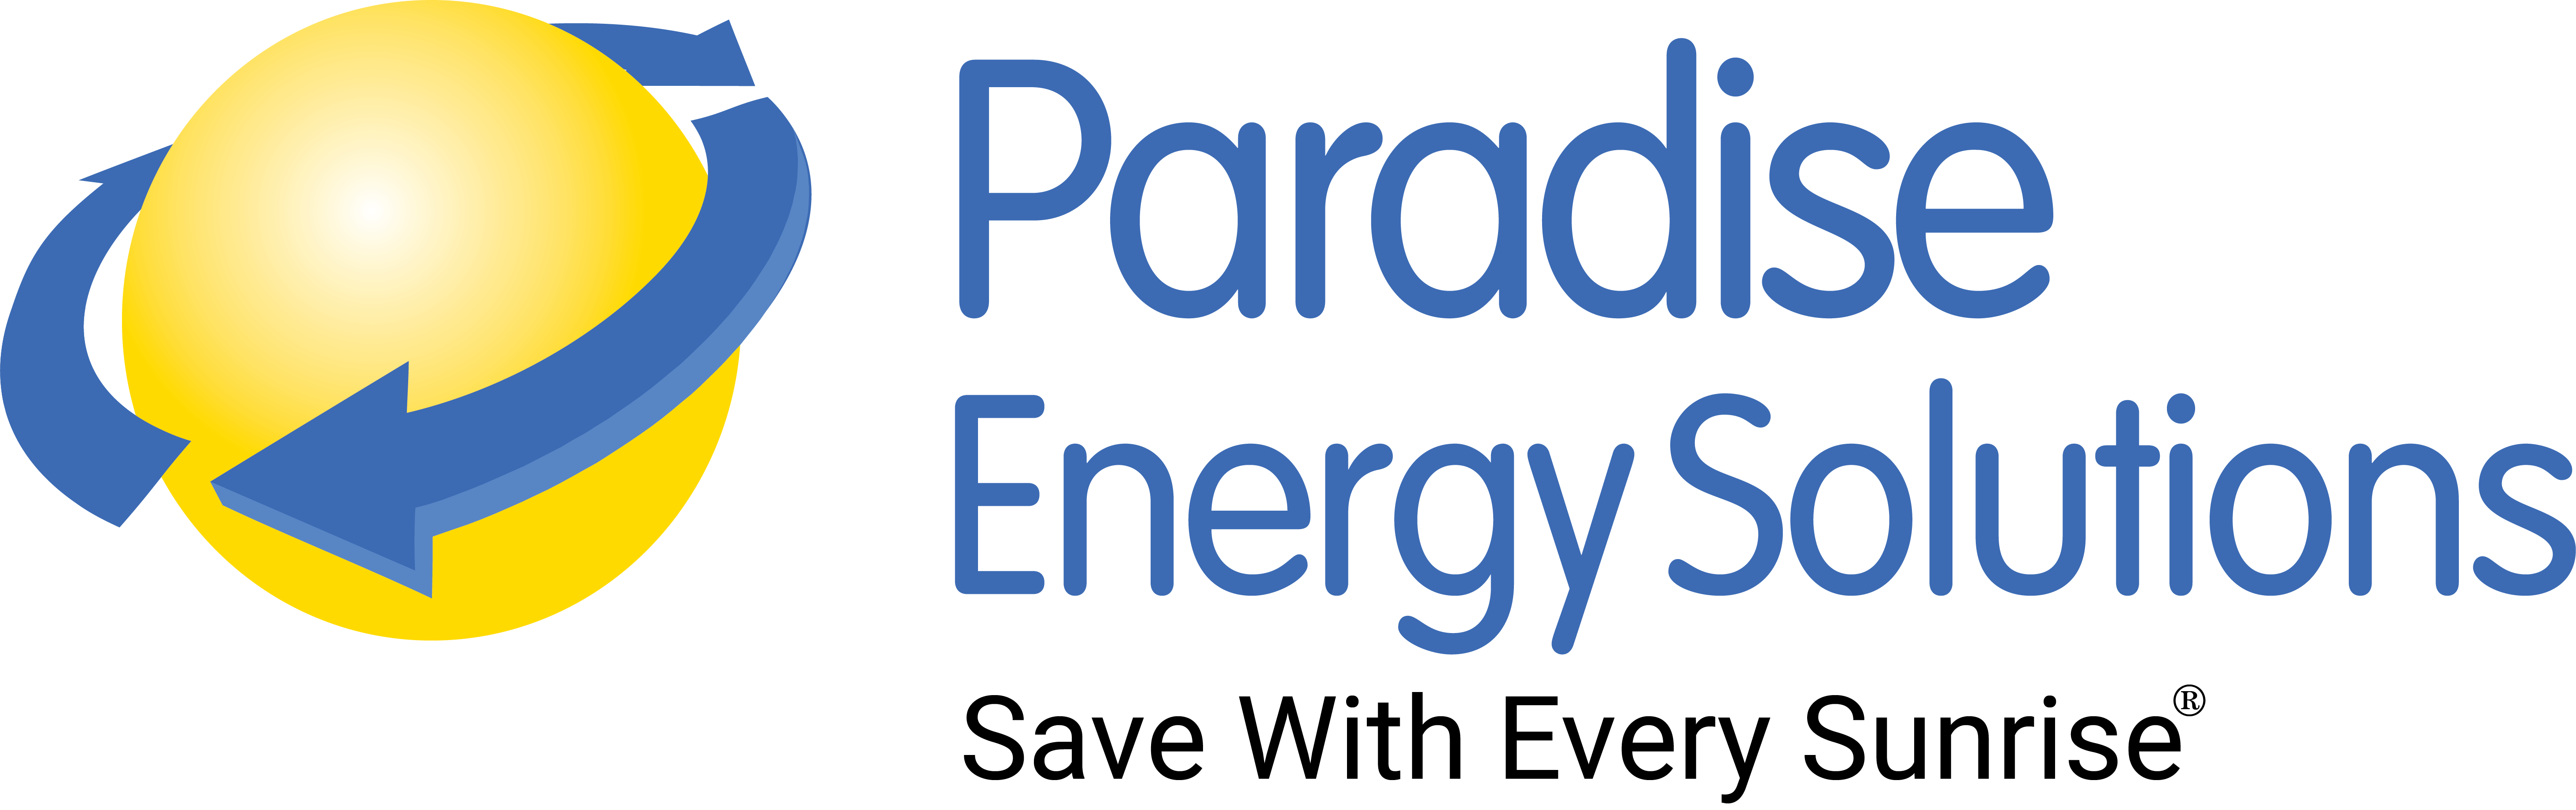 Paradise Energy Solutions logo